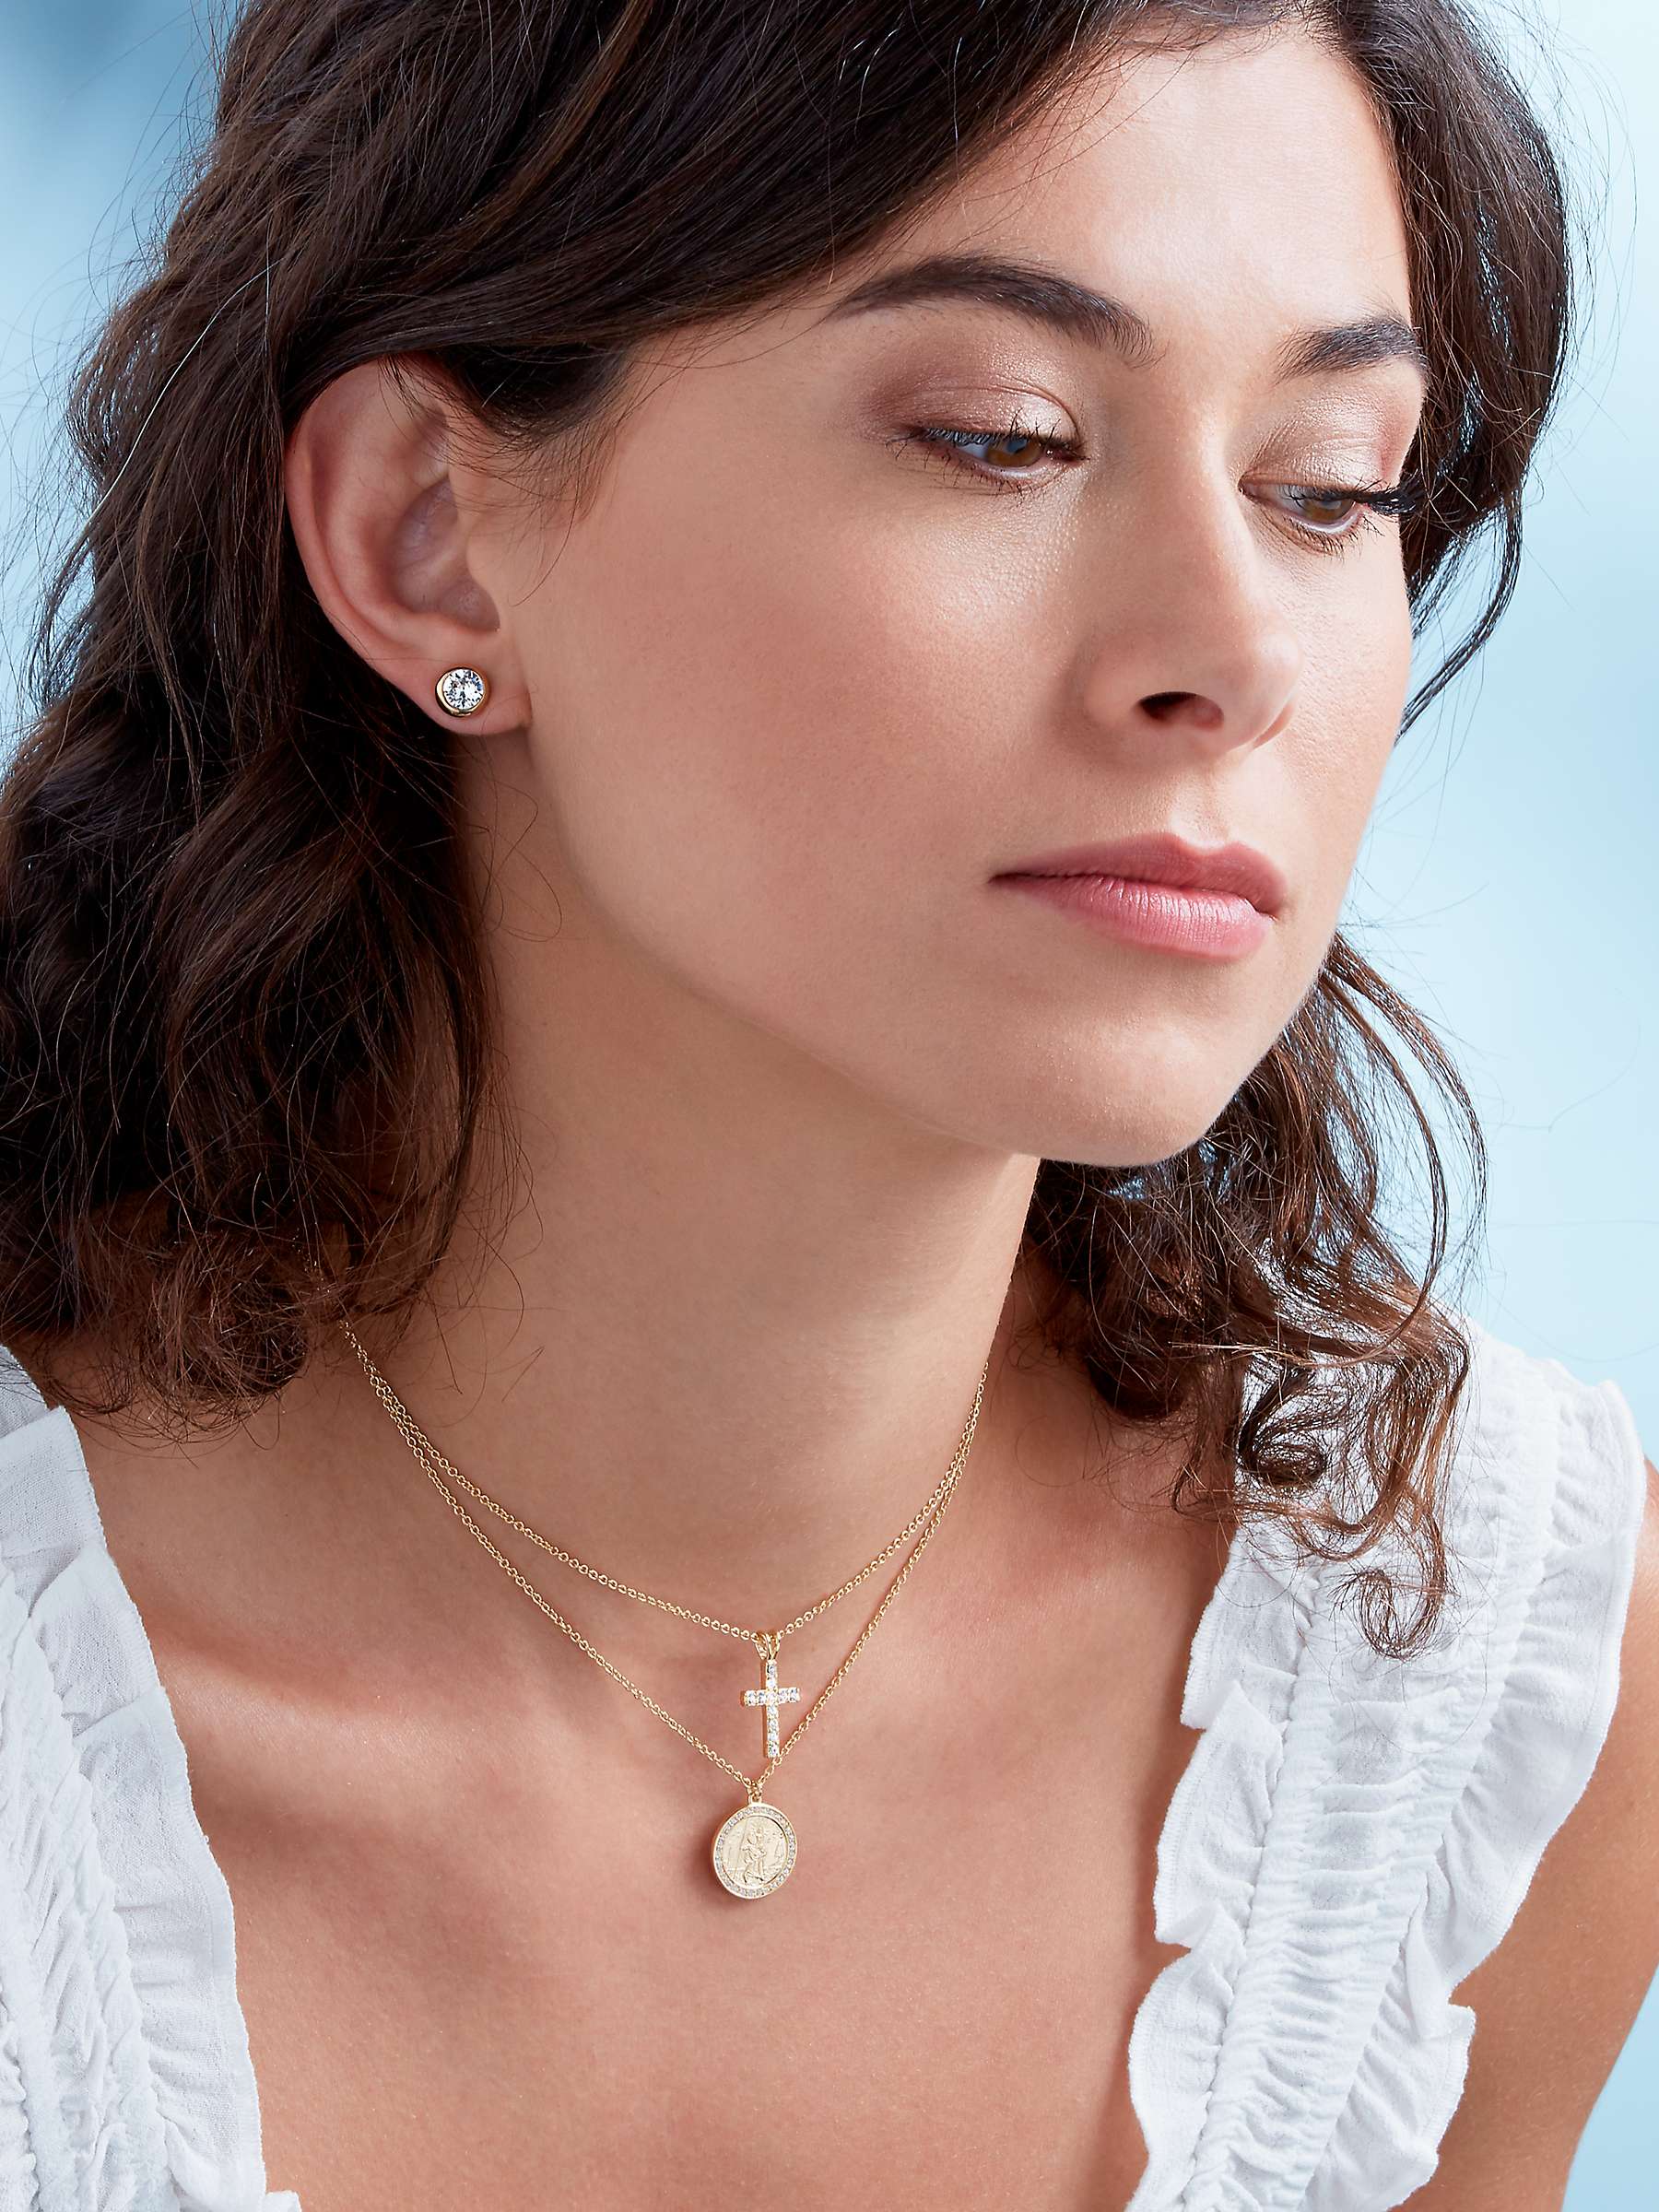 Buy Melissa Odabash Crystal Cross Pendant Necklace Online at johnlewis.com